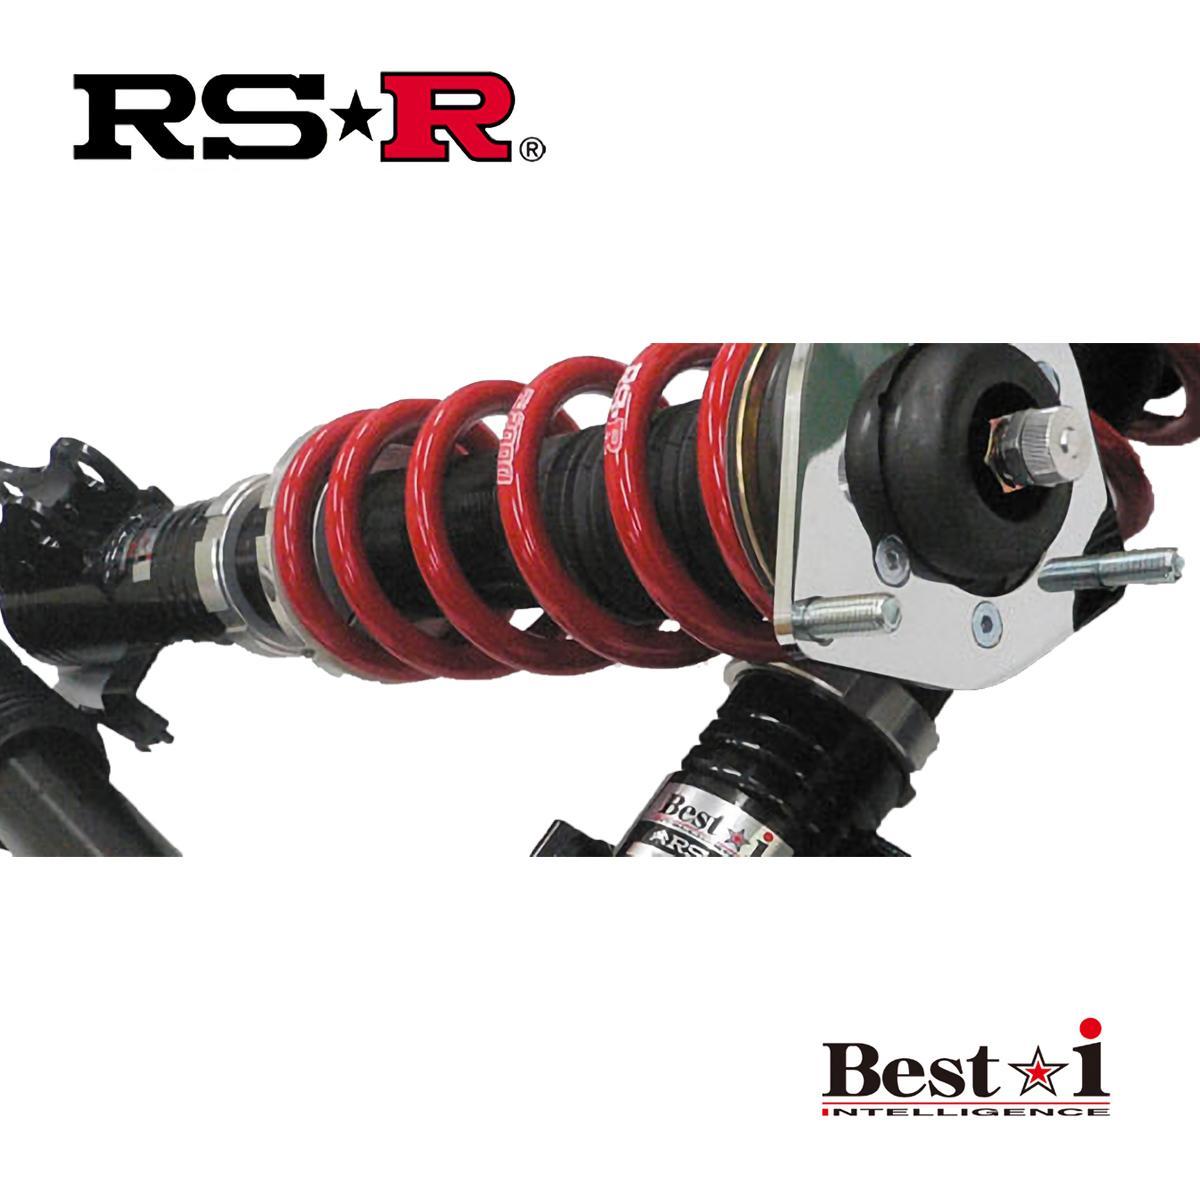 RSR カローラスポーツ NRE210H 車高調 リア車高調整:ネジ式/ハードバネレート仕様 BIT578H RS-R Best-i ベストi_画像1